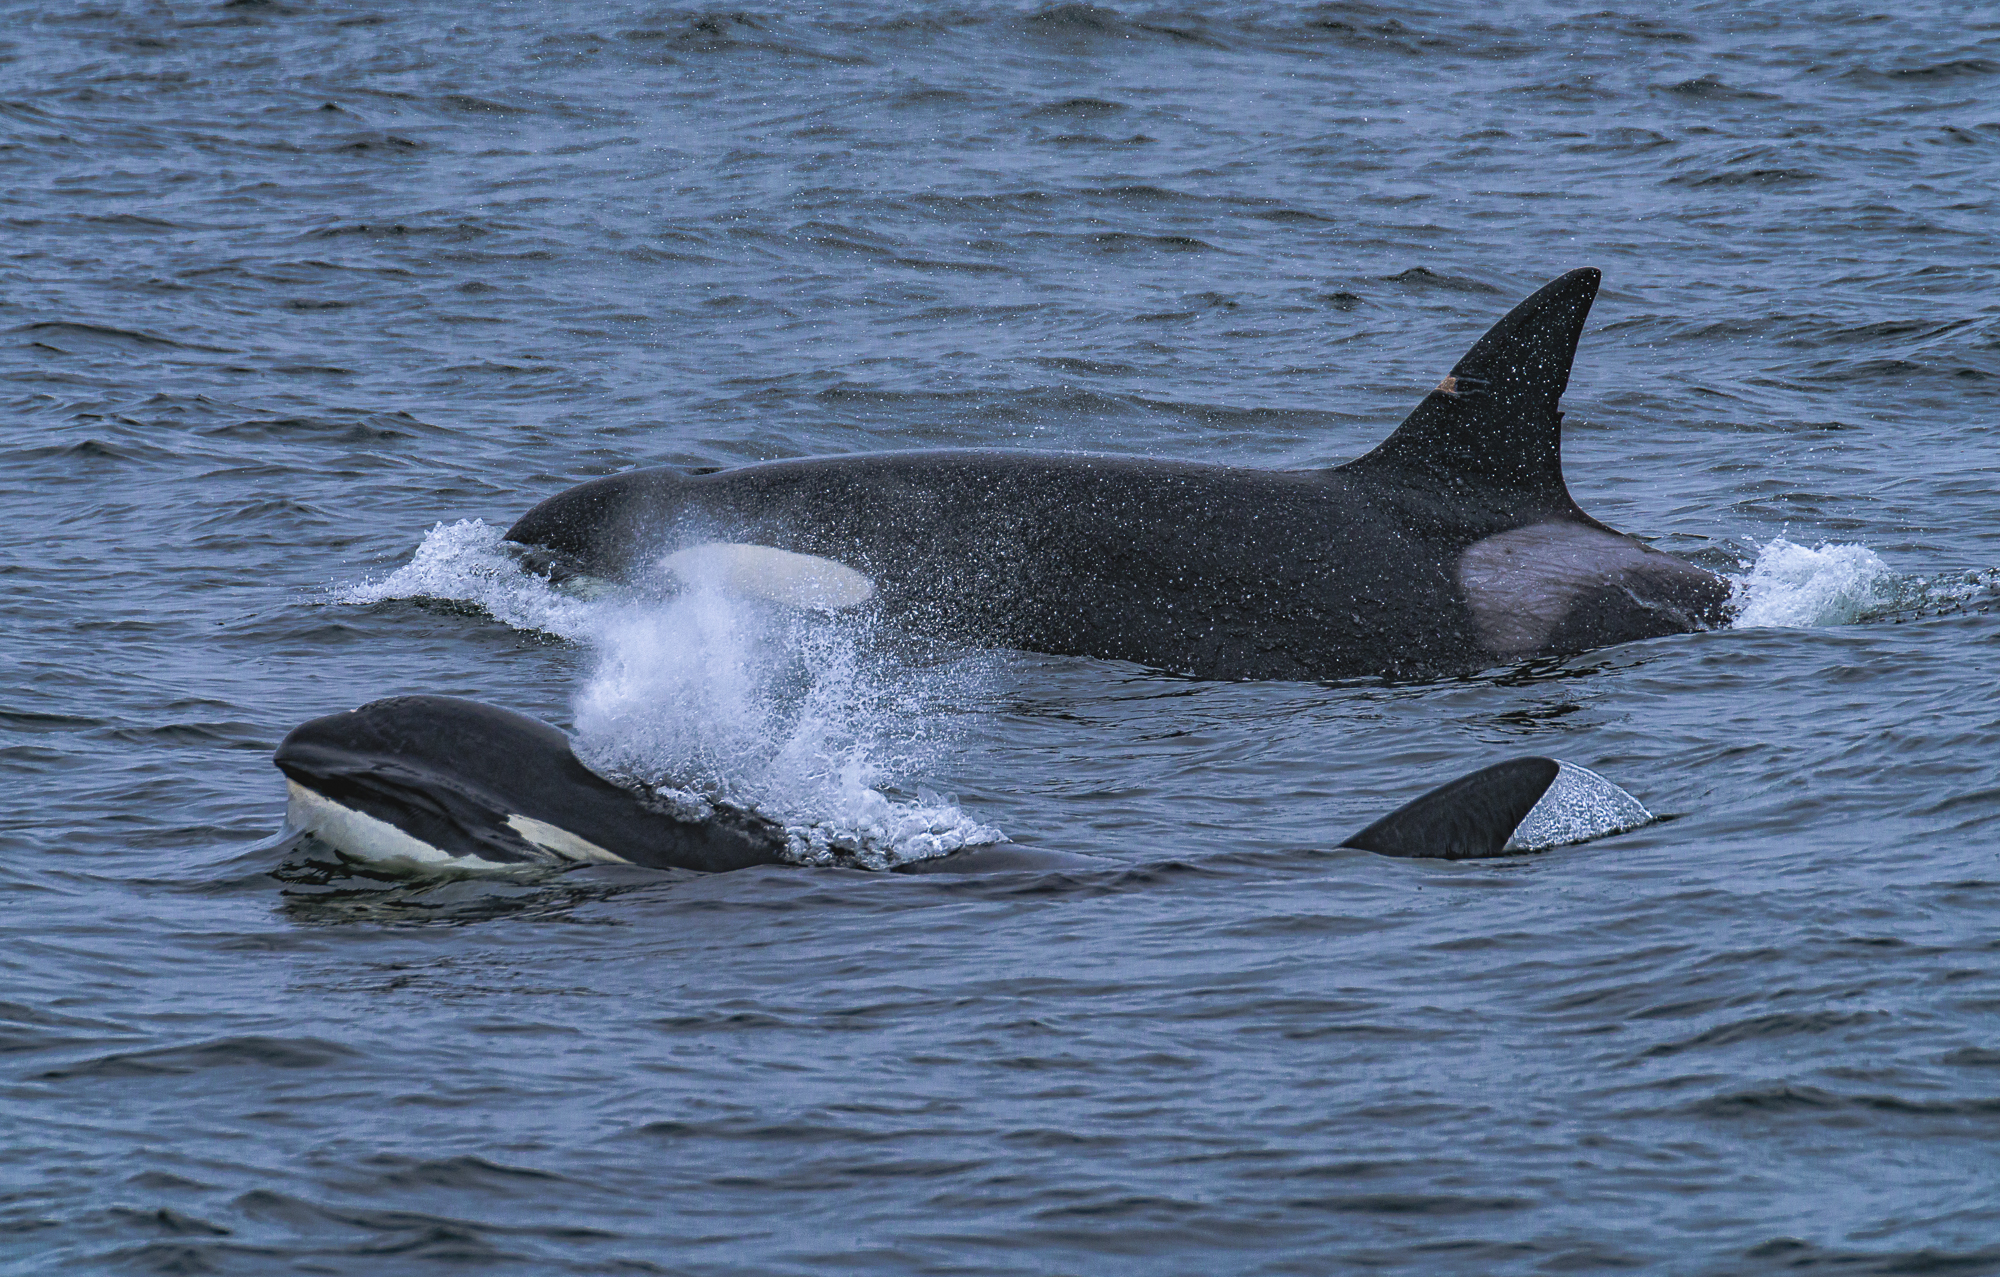 Female Orca with her calf alongside